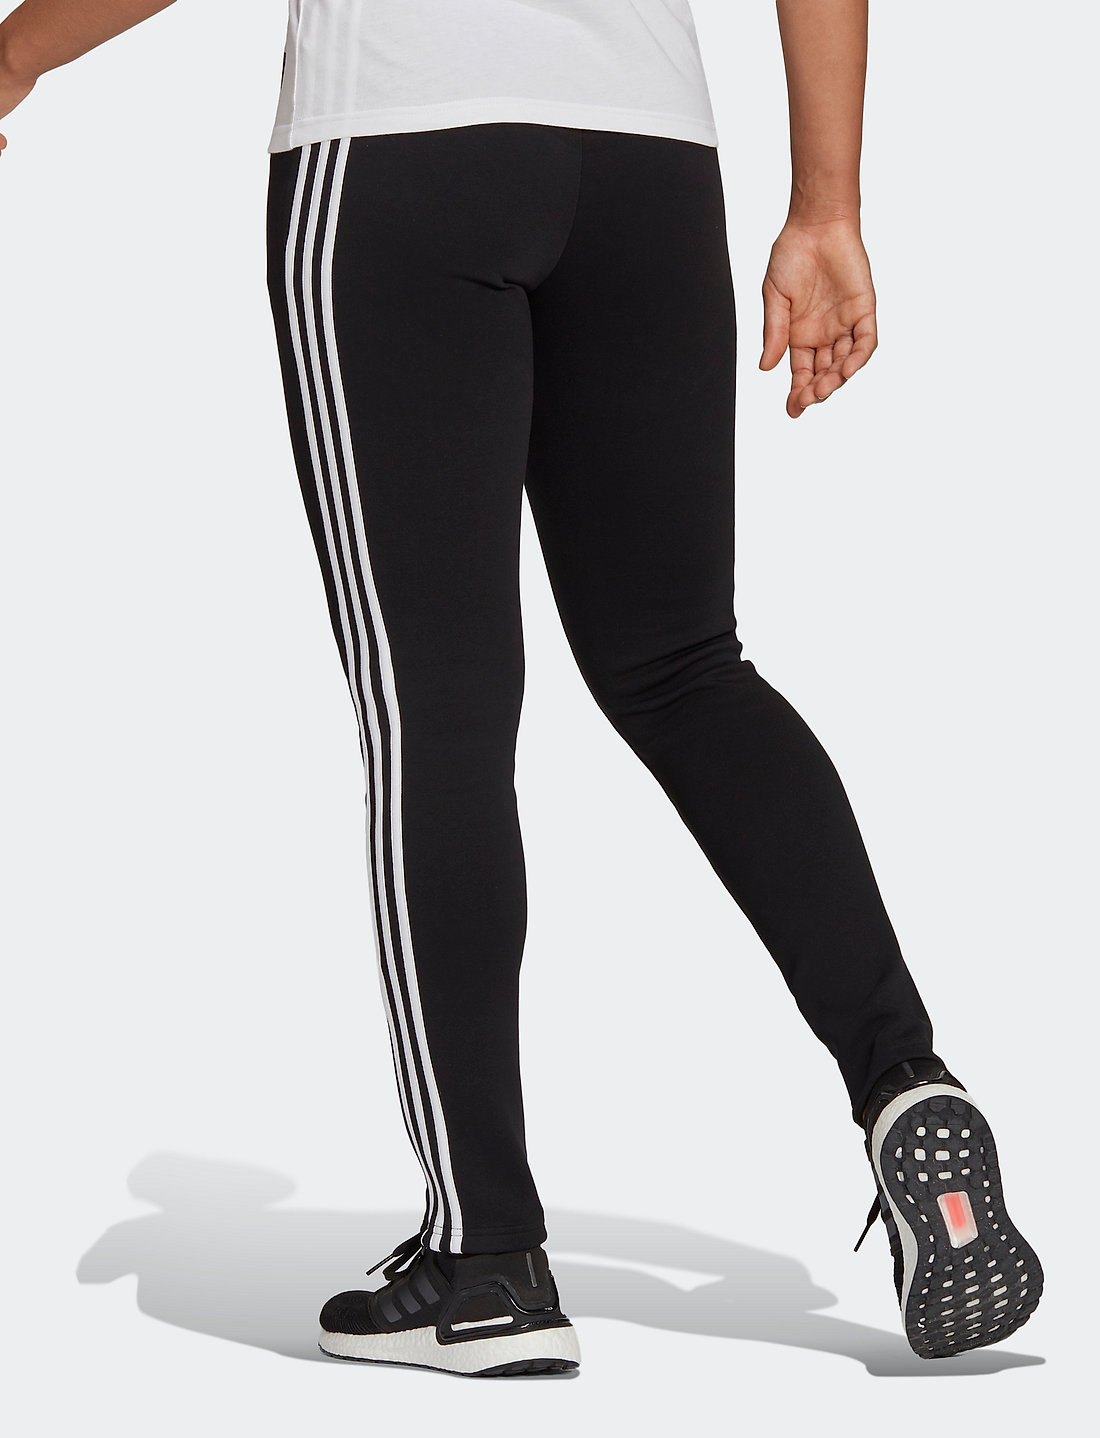 Pants W adidas Skinny Icons Future Sweatpants - 3-stripes Sportswear Sportswear